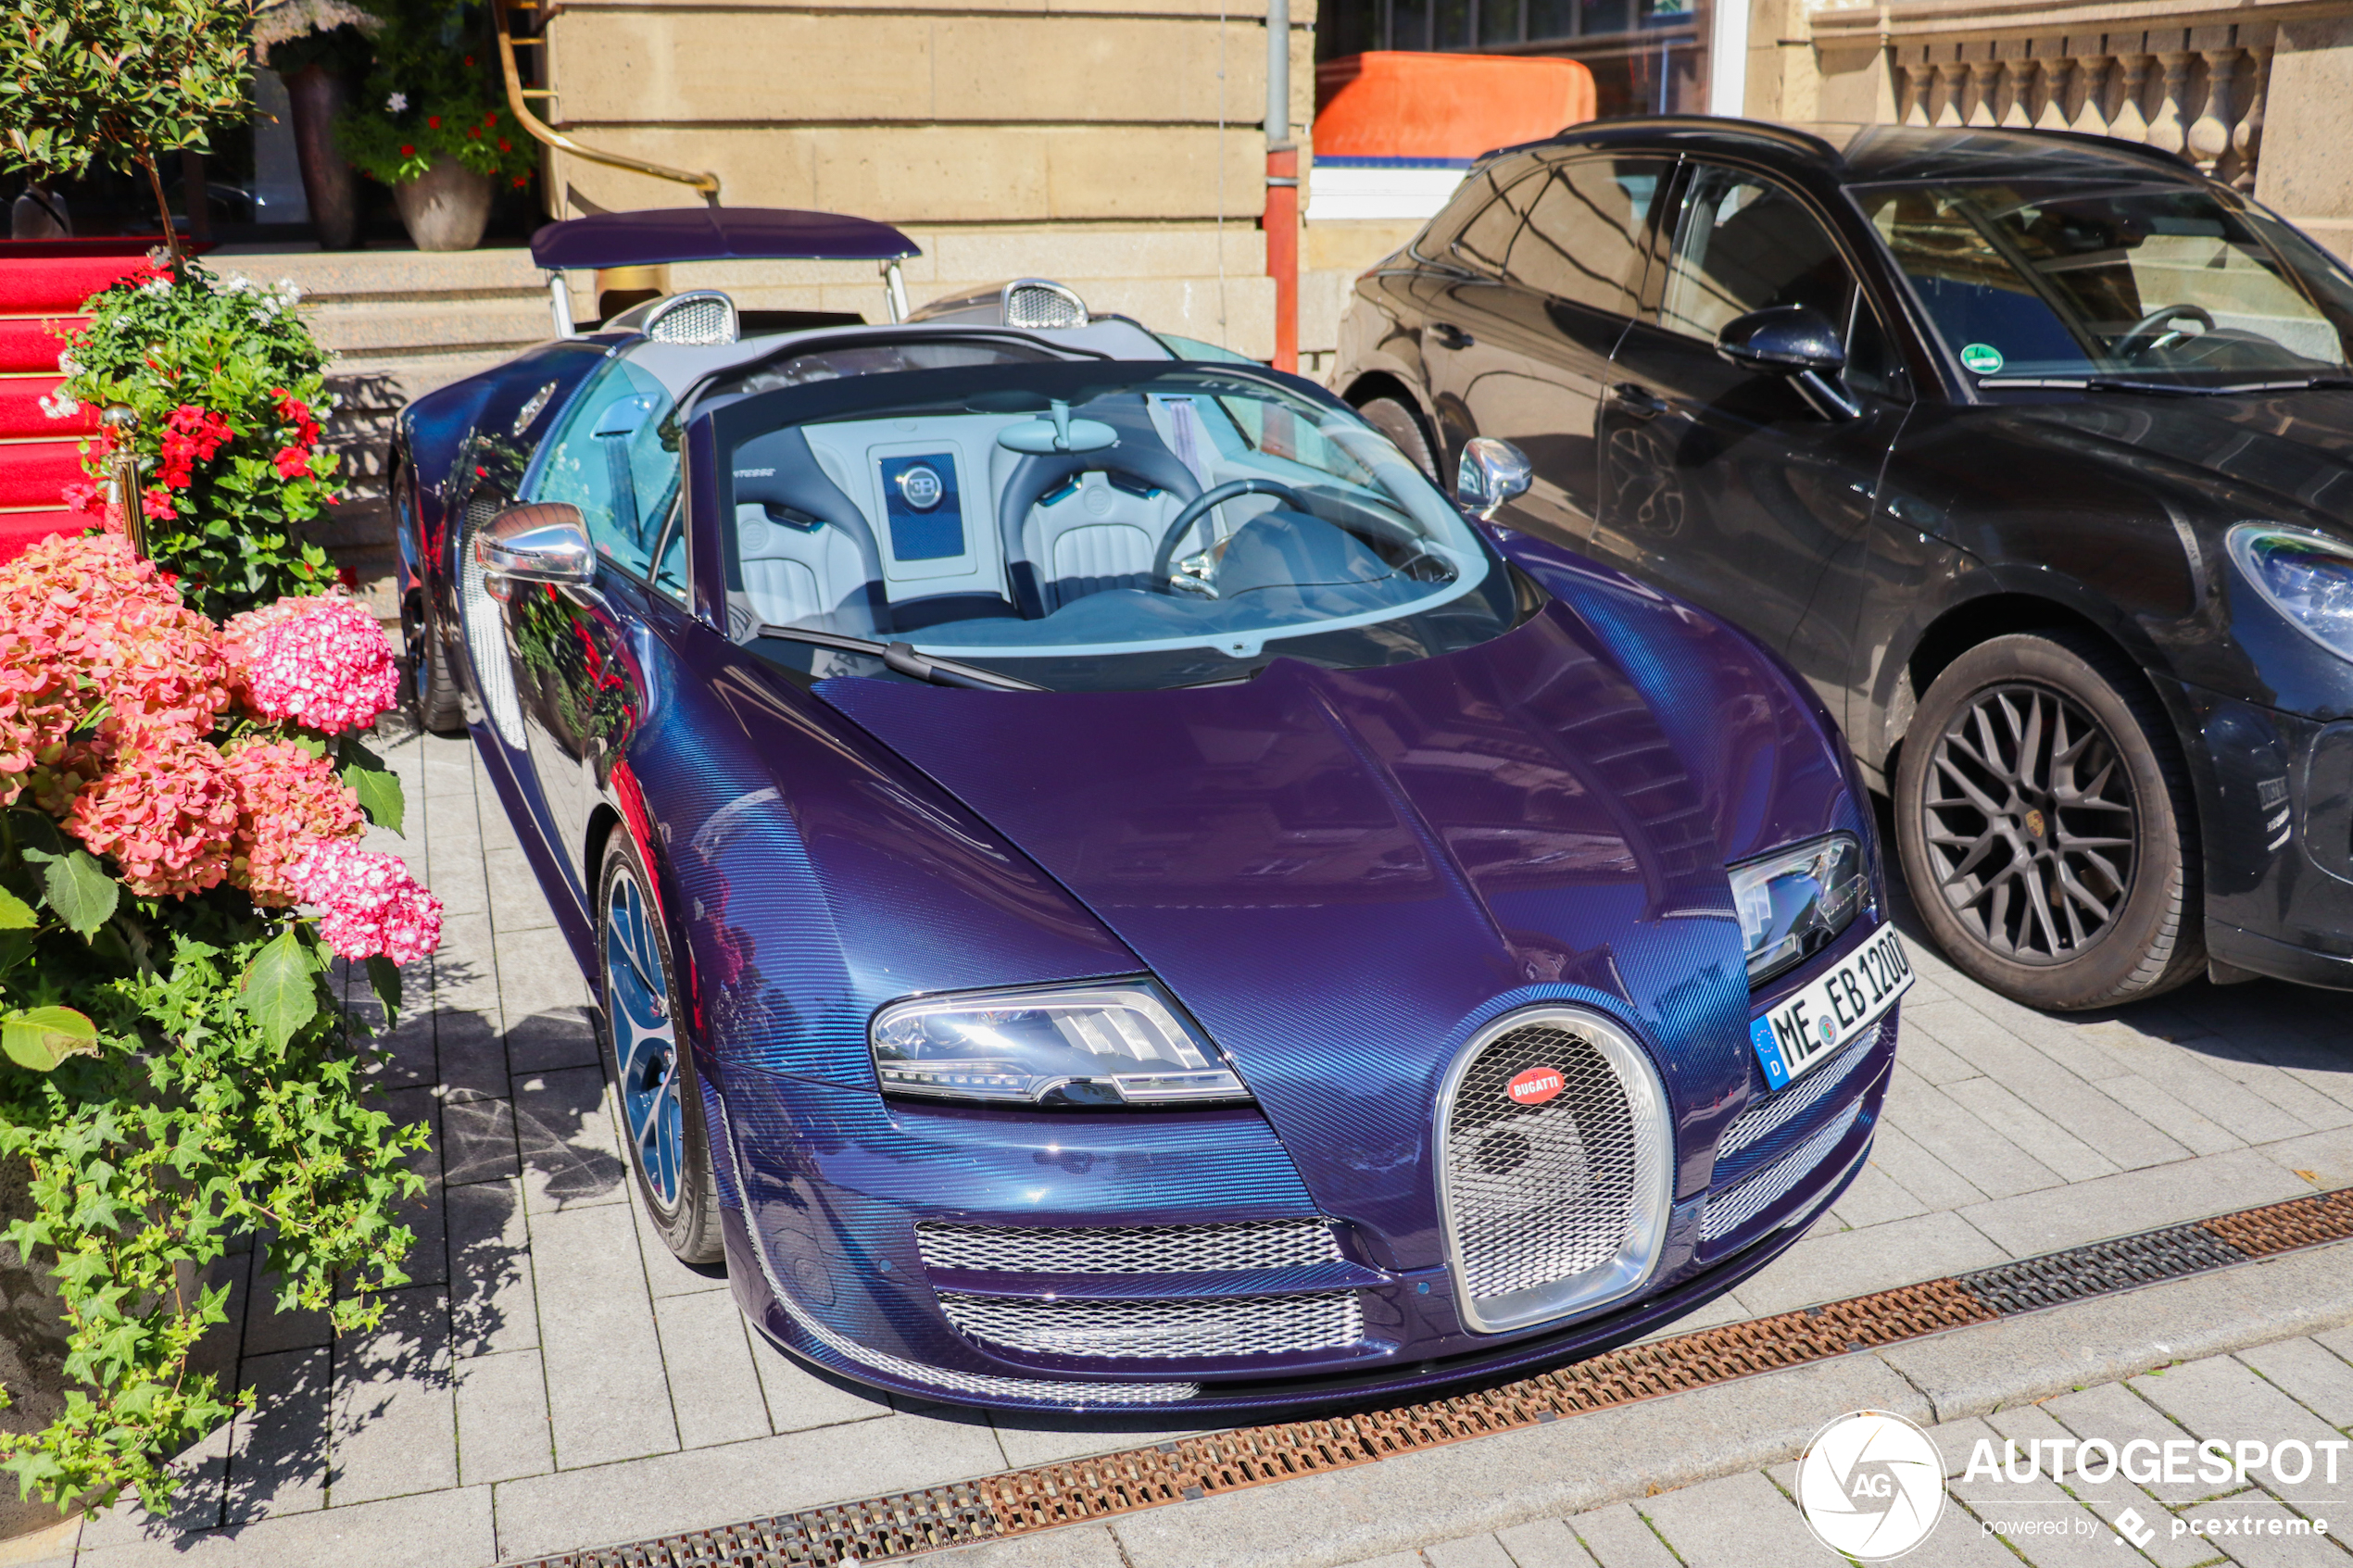 Weekendspots: Bugatti Veyron